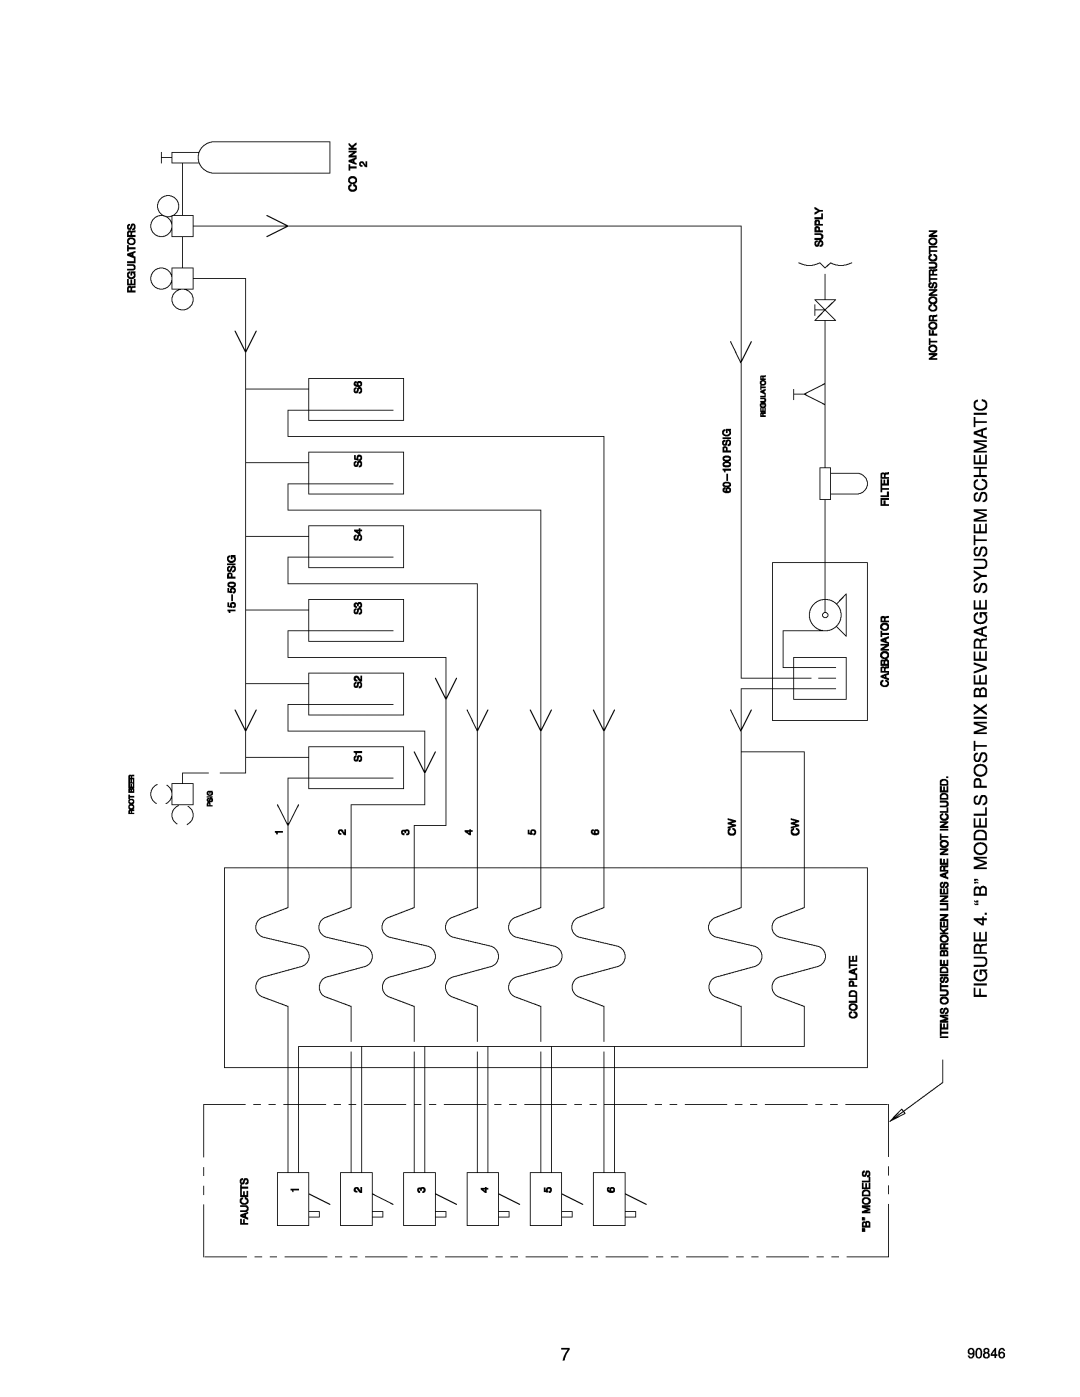 Everpure 80, SID650A manual “B” Models Post Mix Beverage Syustem Schematic 